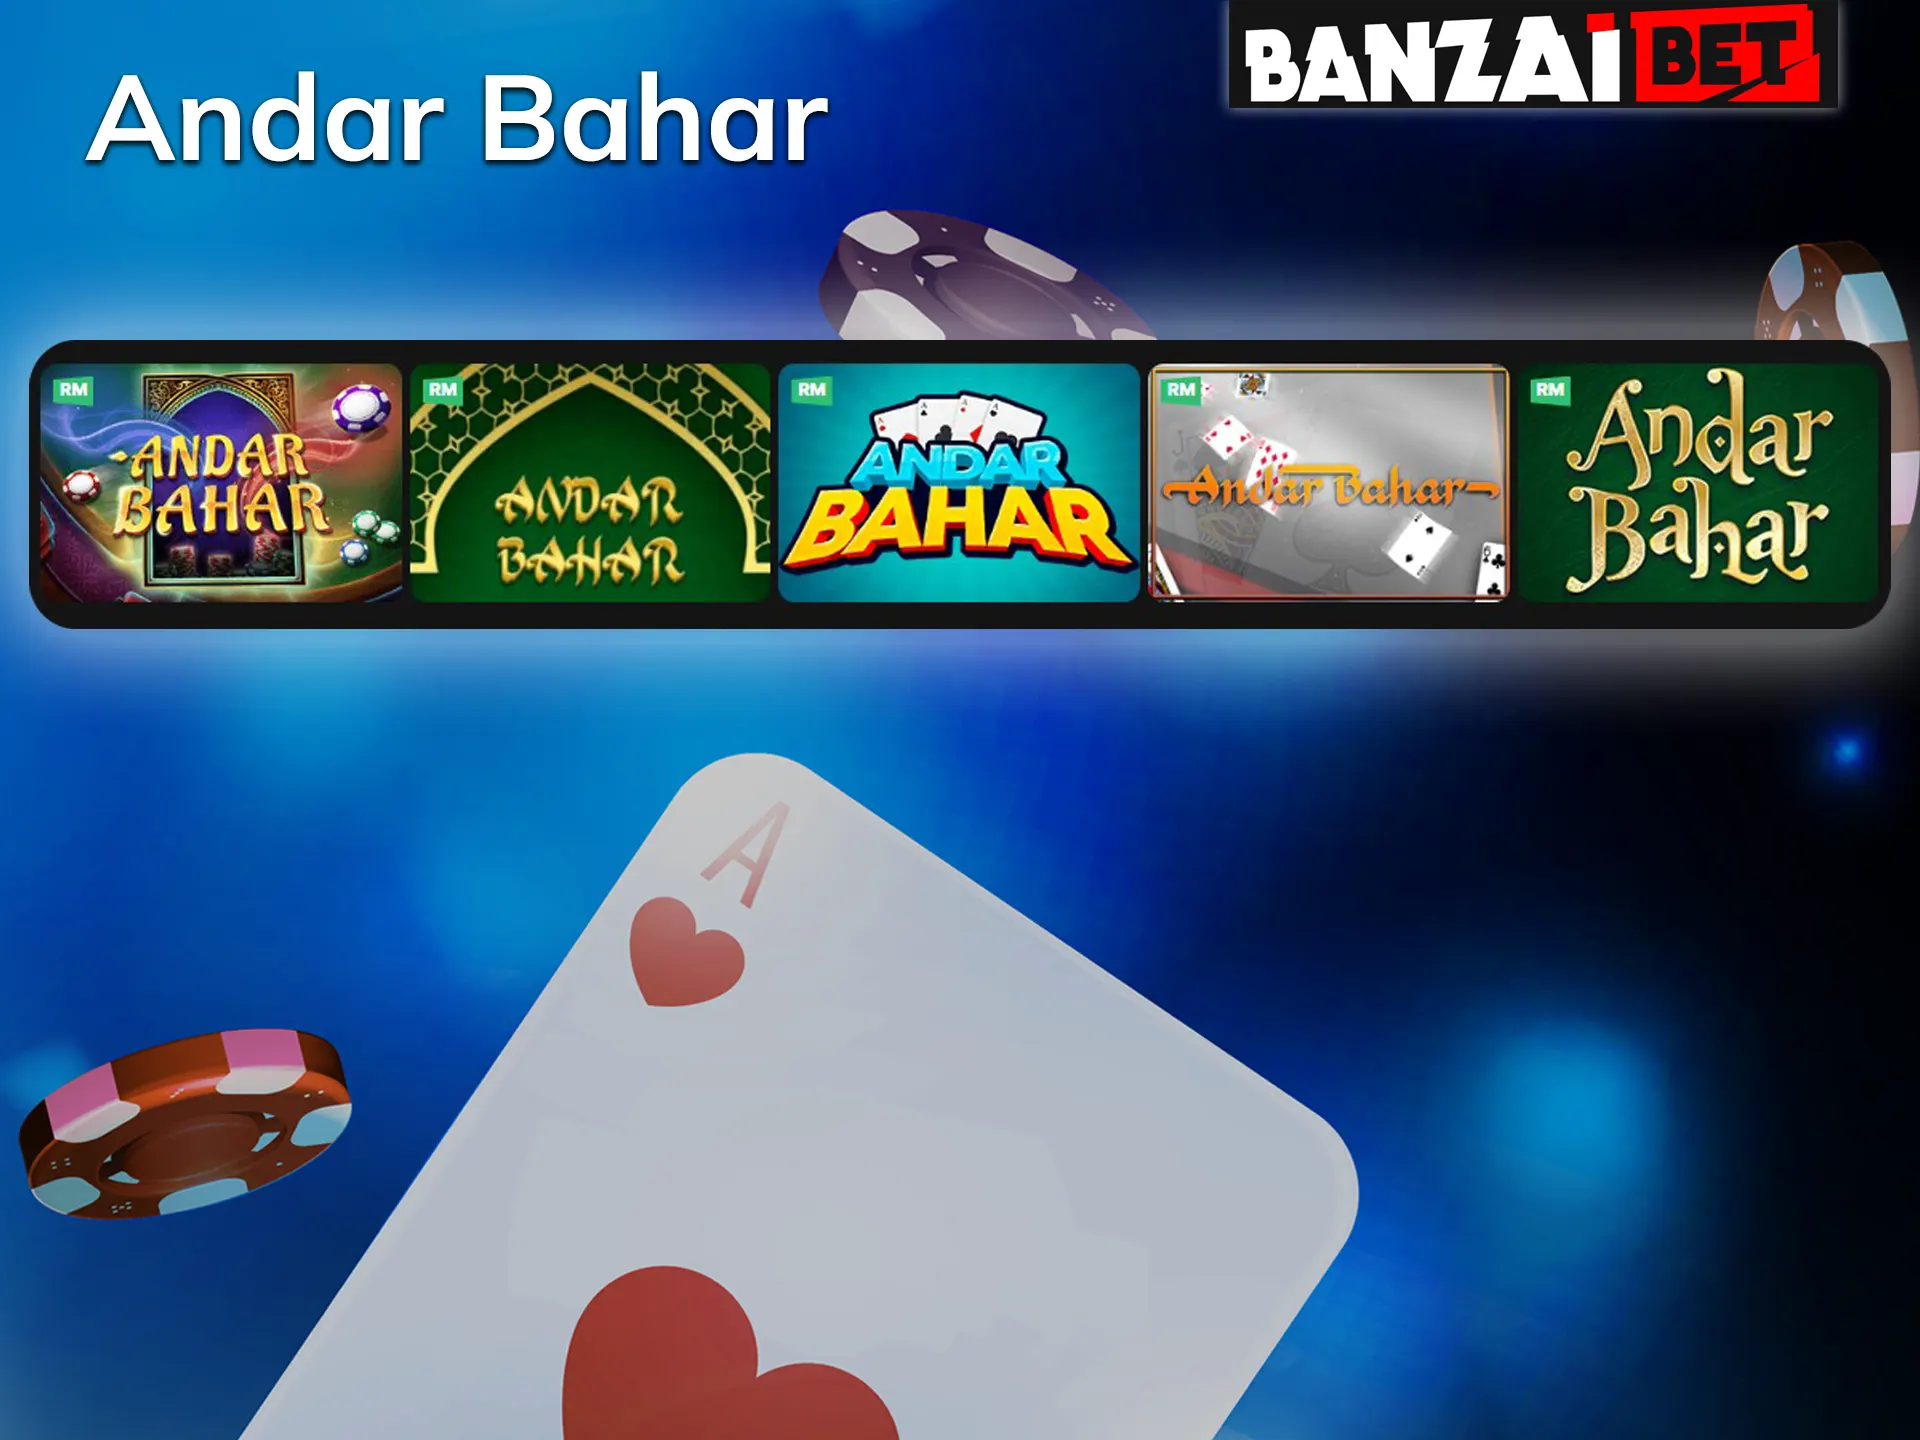 Play Andar Bahar at Banzai Bet online casino.